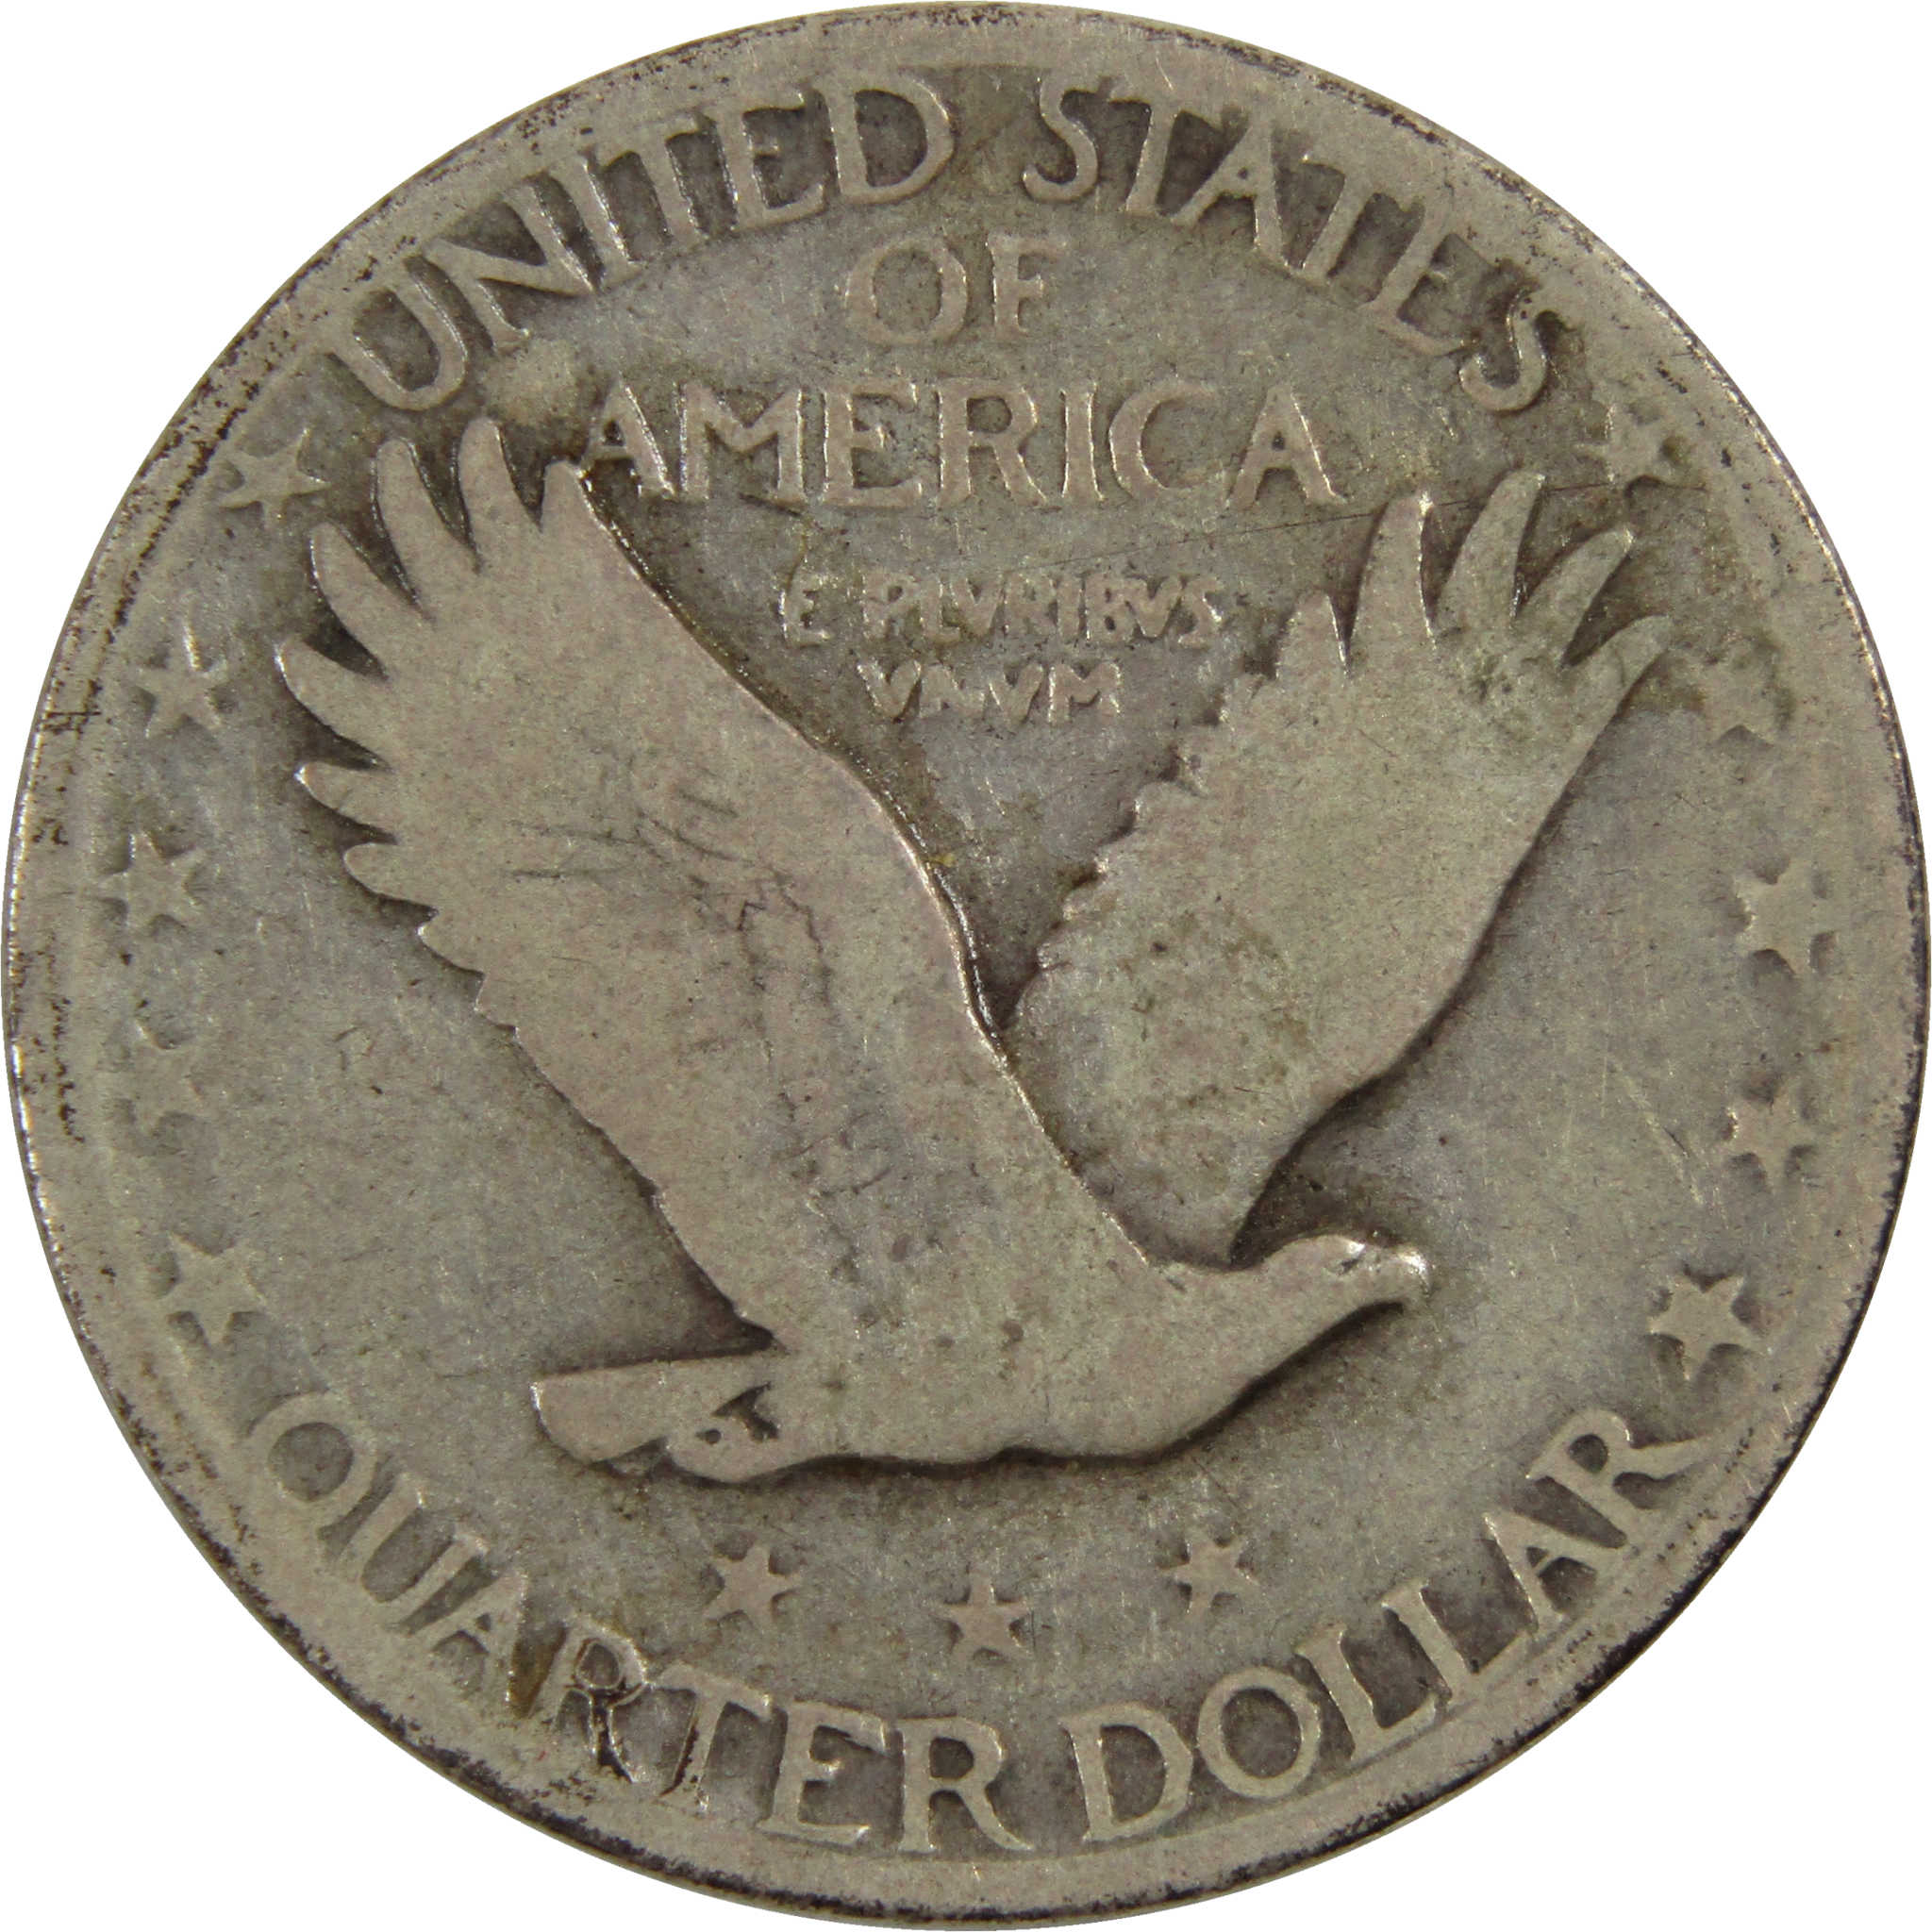 1927 S Standing Liberty Quarter VG Very Good 90% Silver 25c Coin SKU:I8144